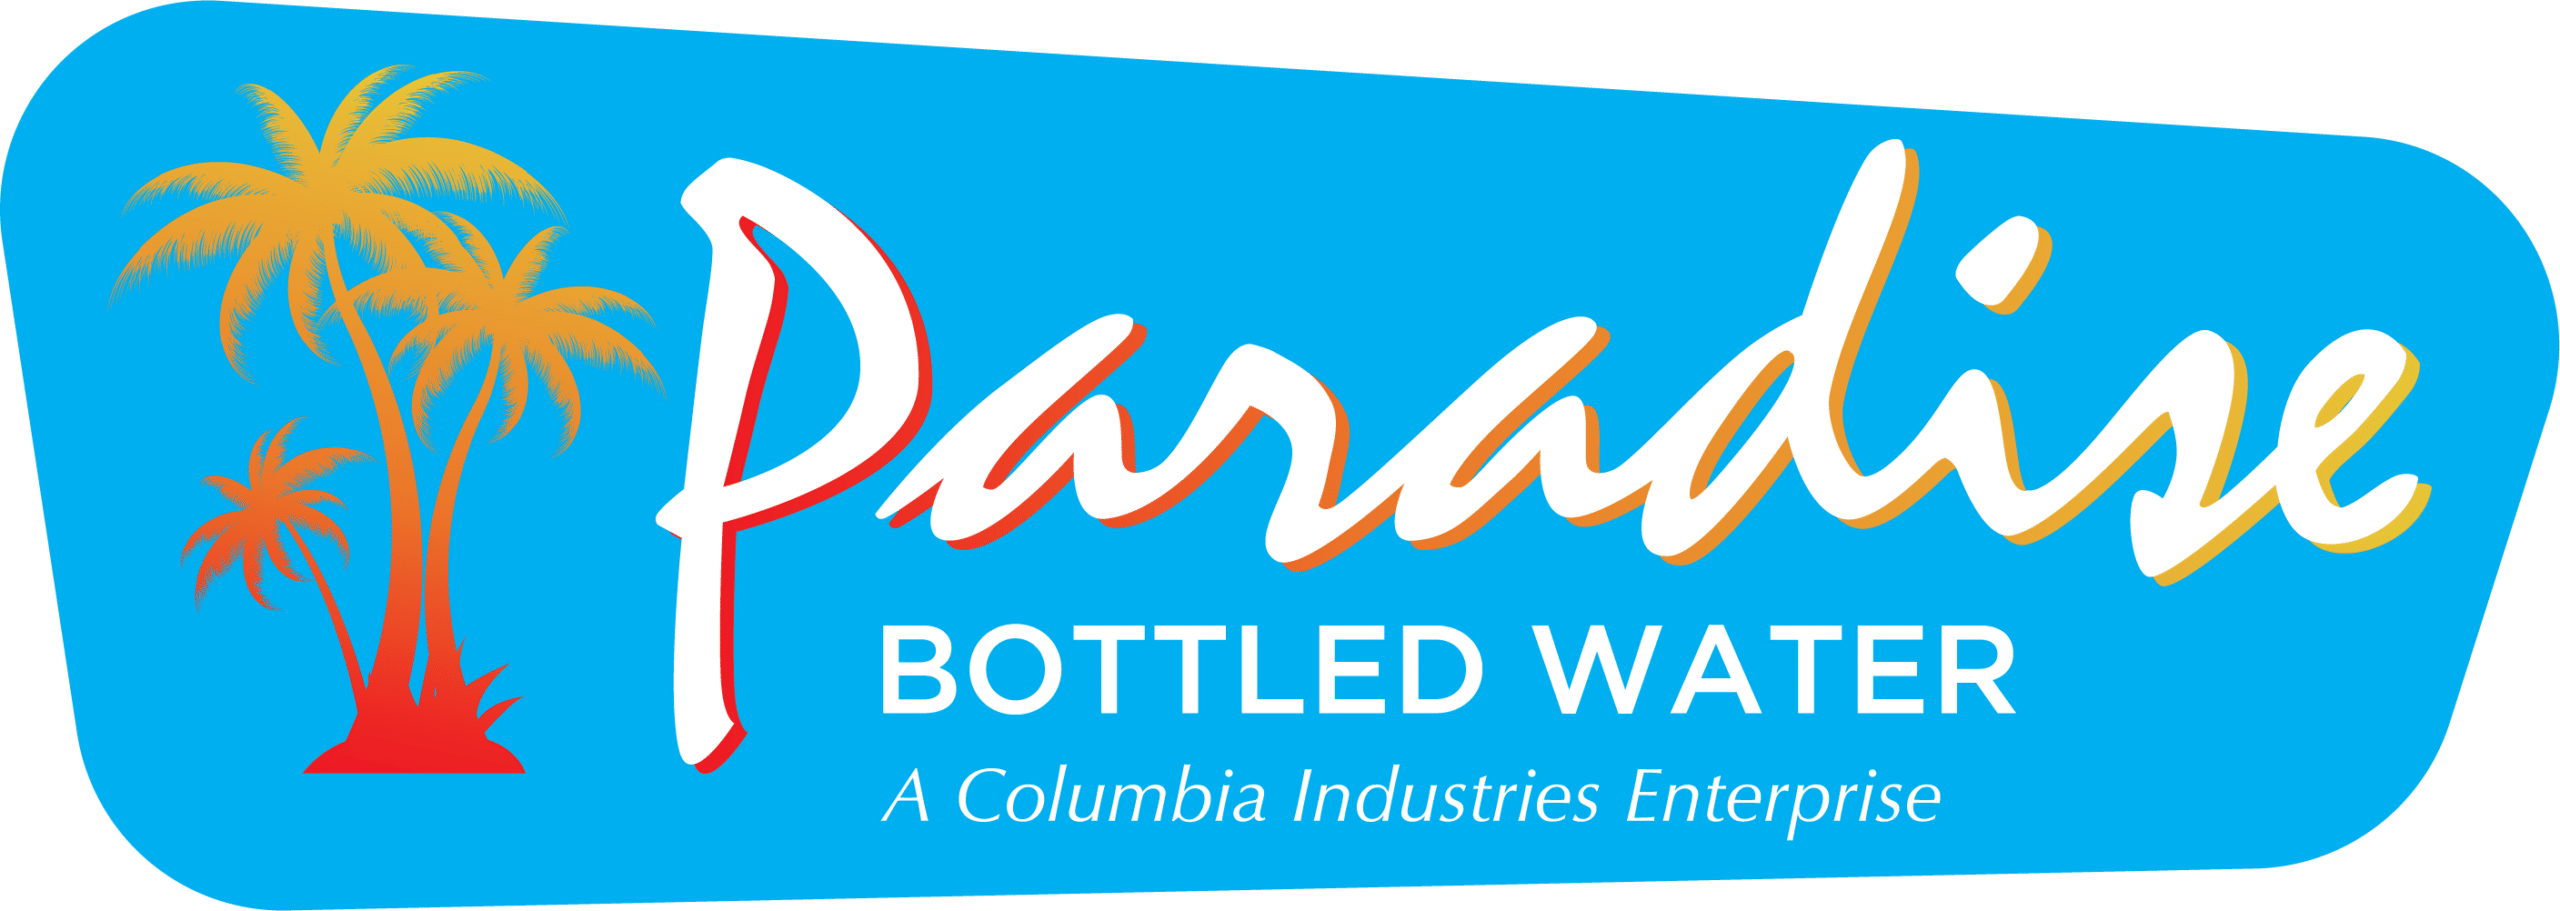 Paradise Bottled Water Logo. Tagline reads A Columbia Industries Enterprise.